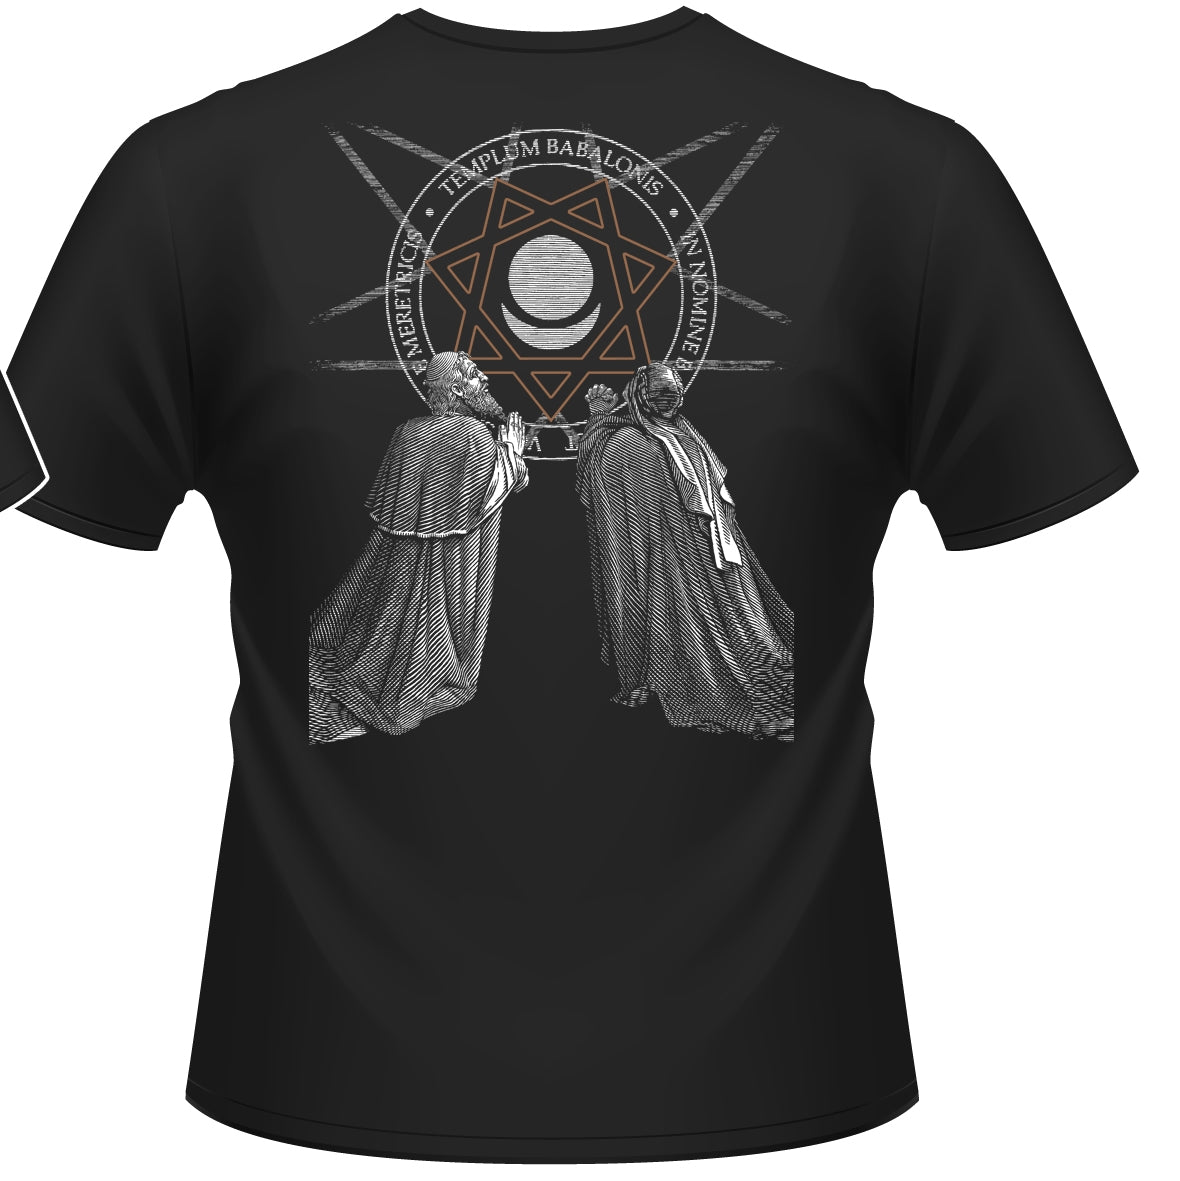 Behemoth - Evangelion Short Sleeved T-shirt